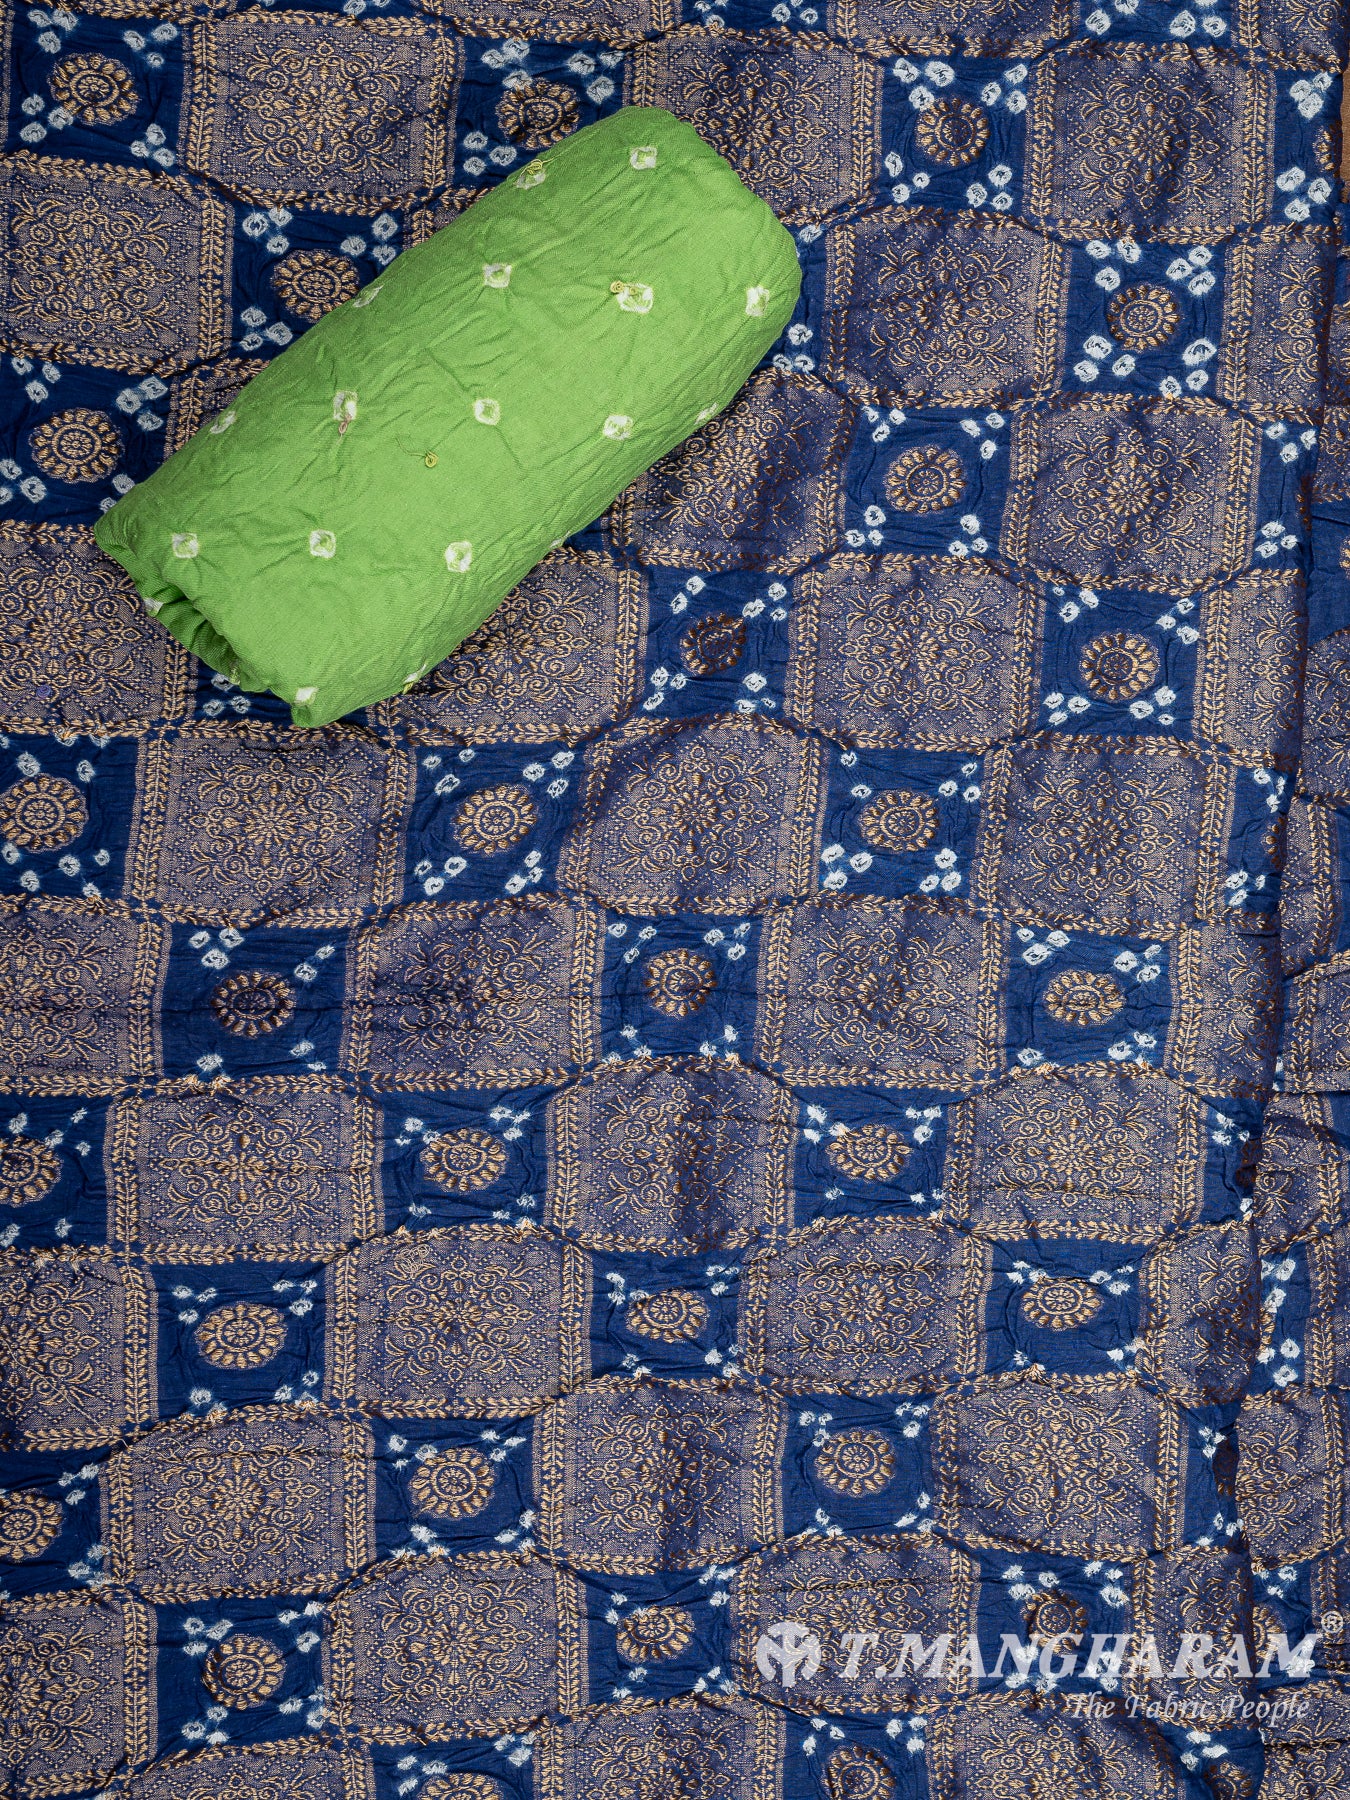 Mutlicolor Cotton Chudidhar Fabric Set - EG1784 view-2